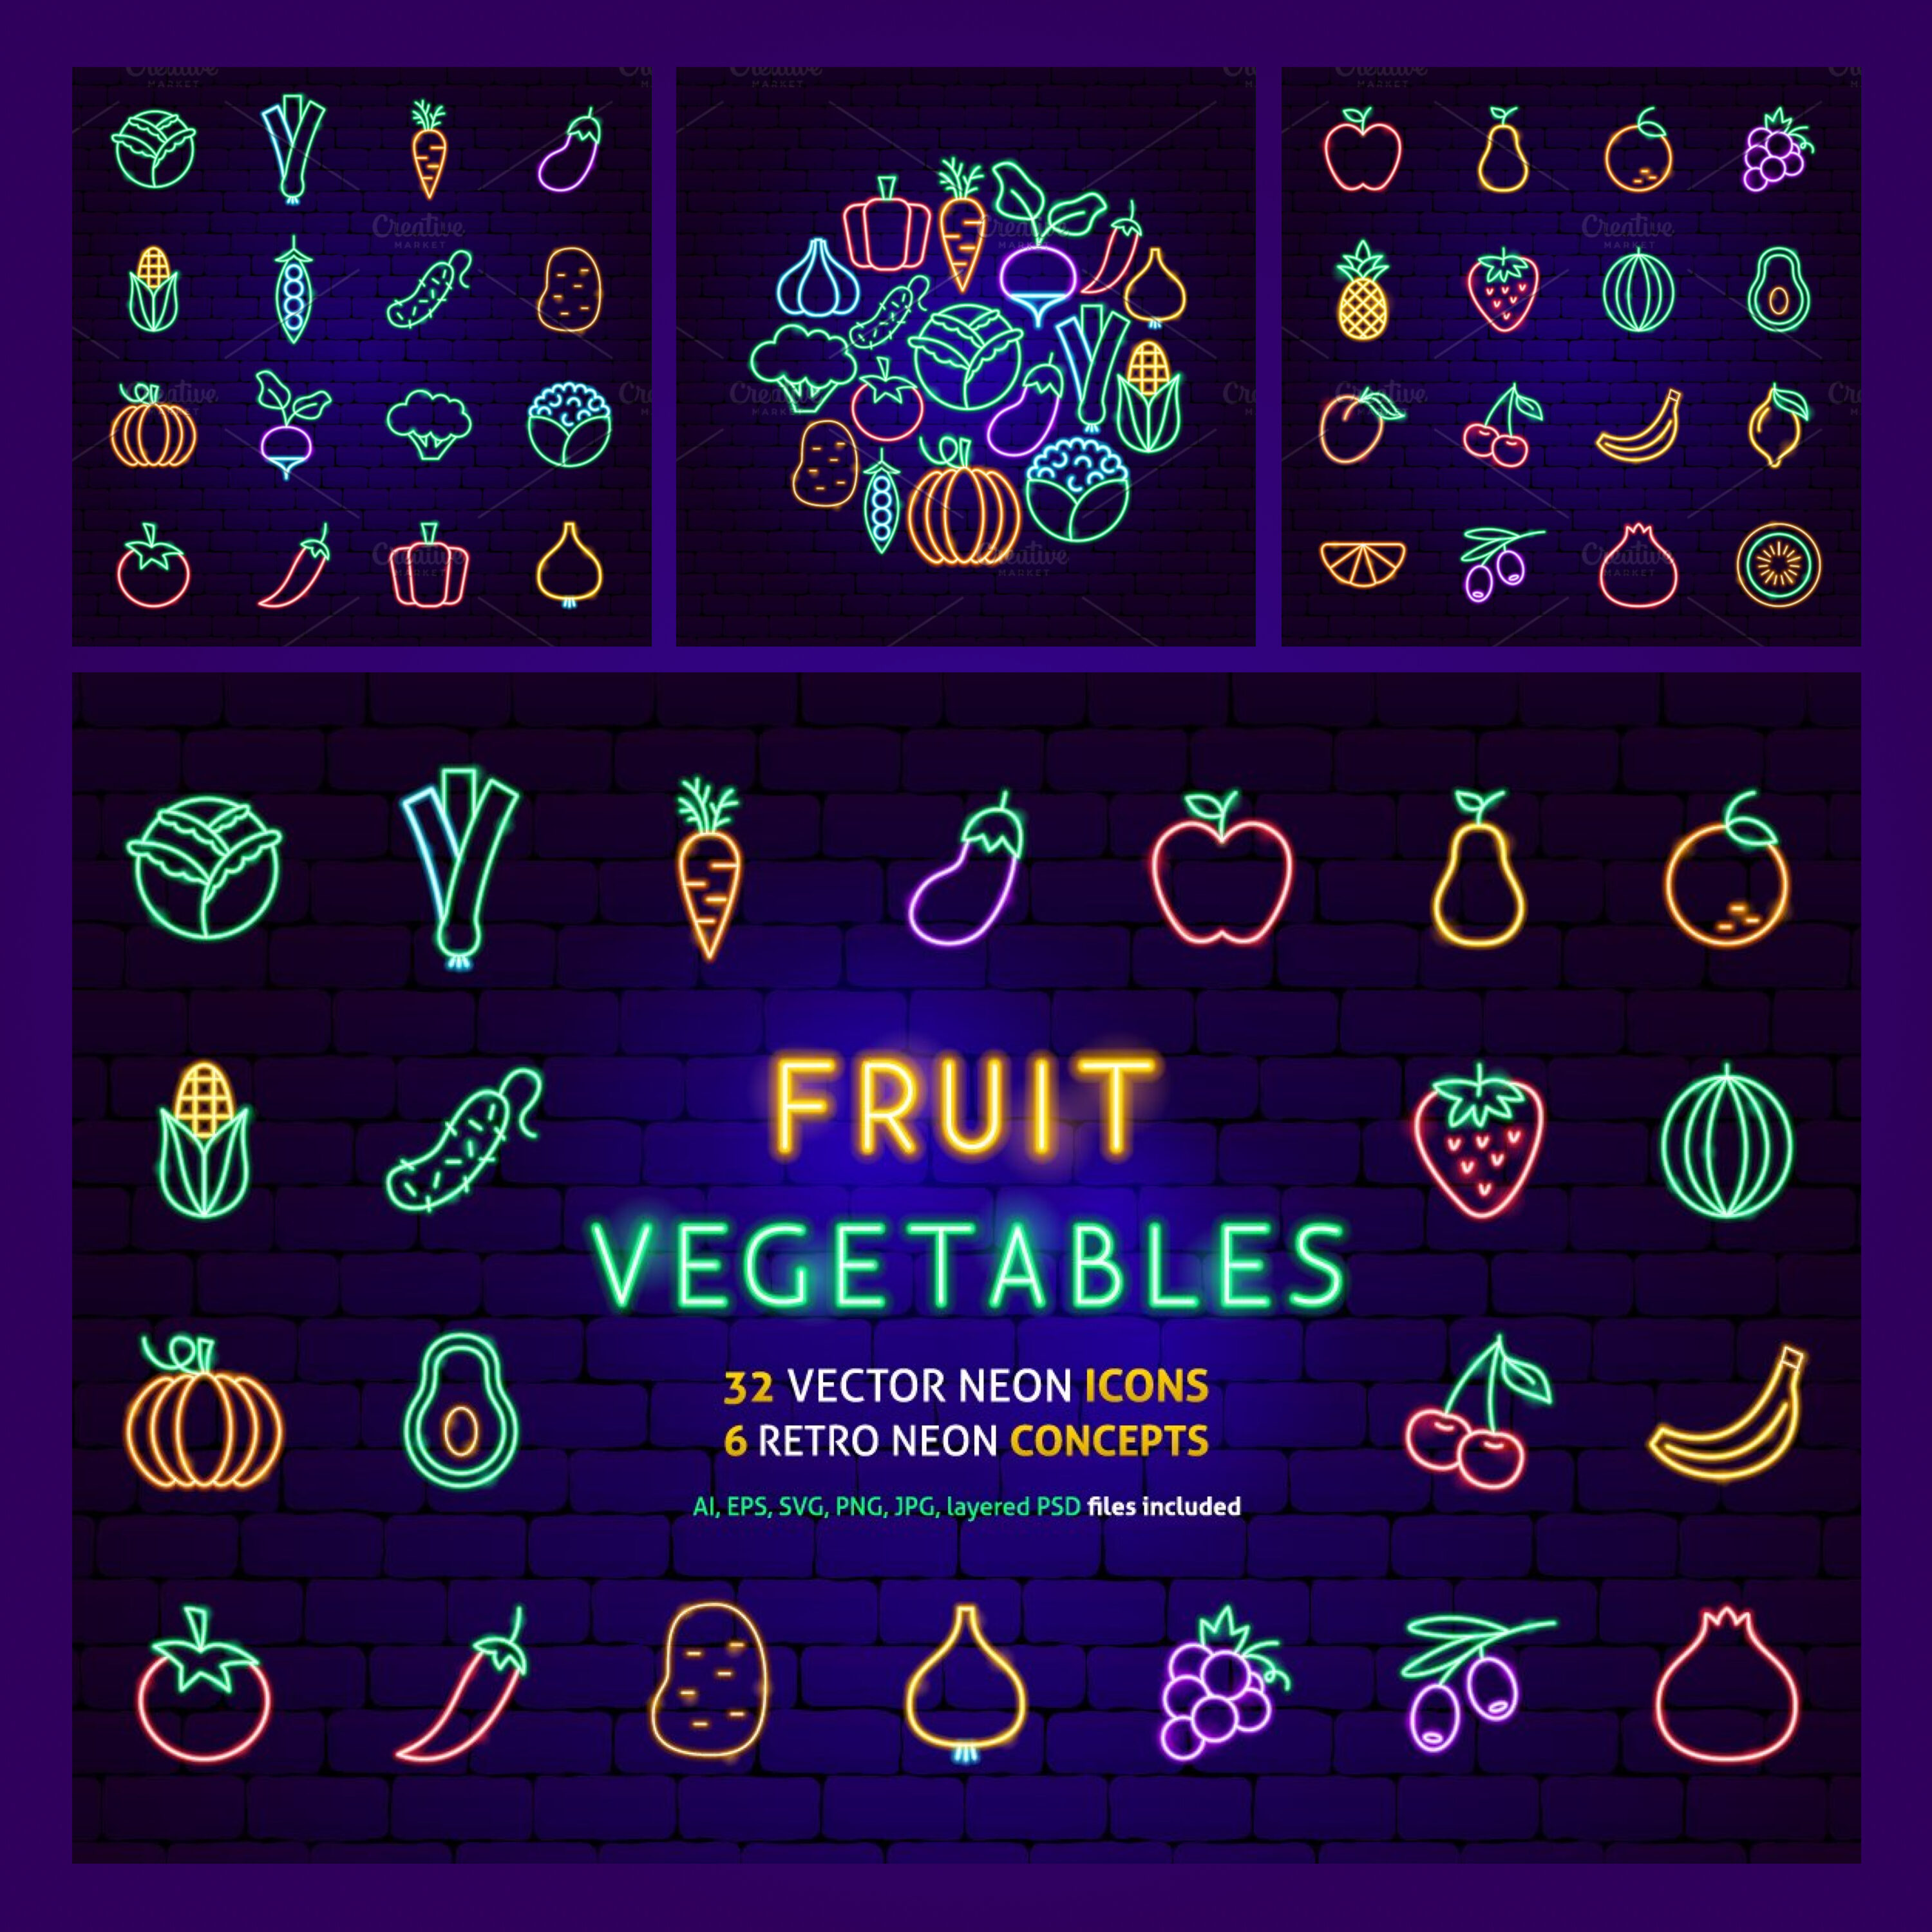 Prints of fruit vegetables neon.